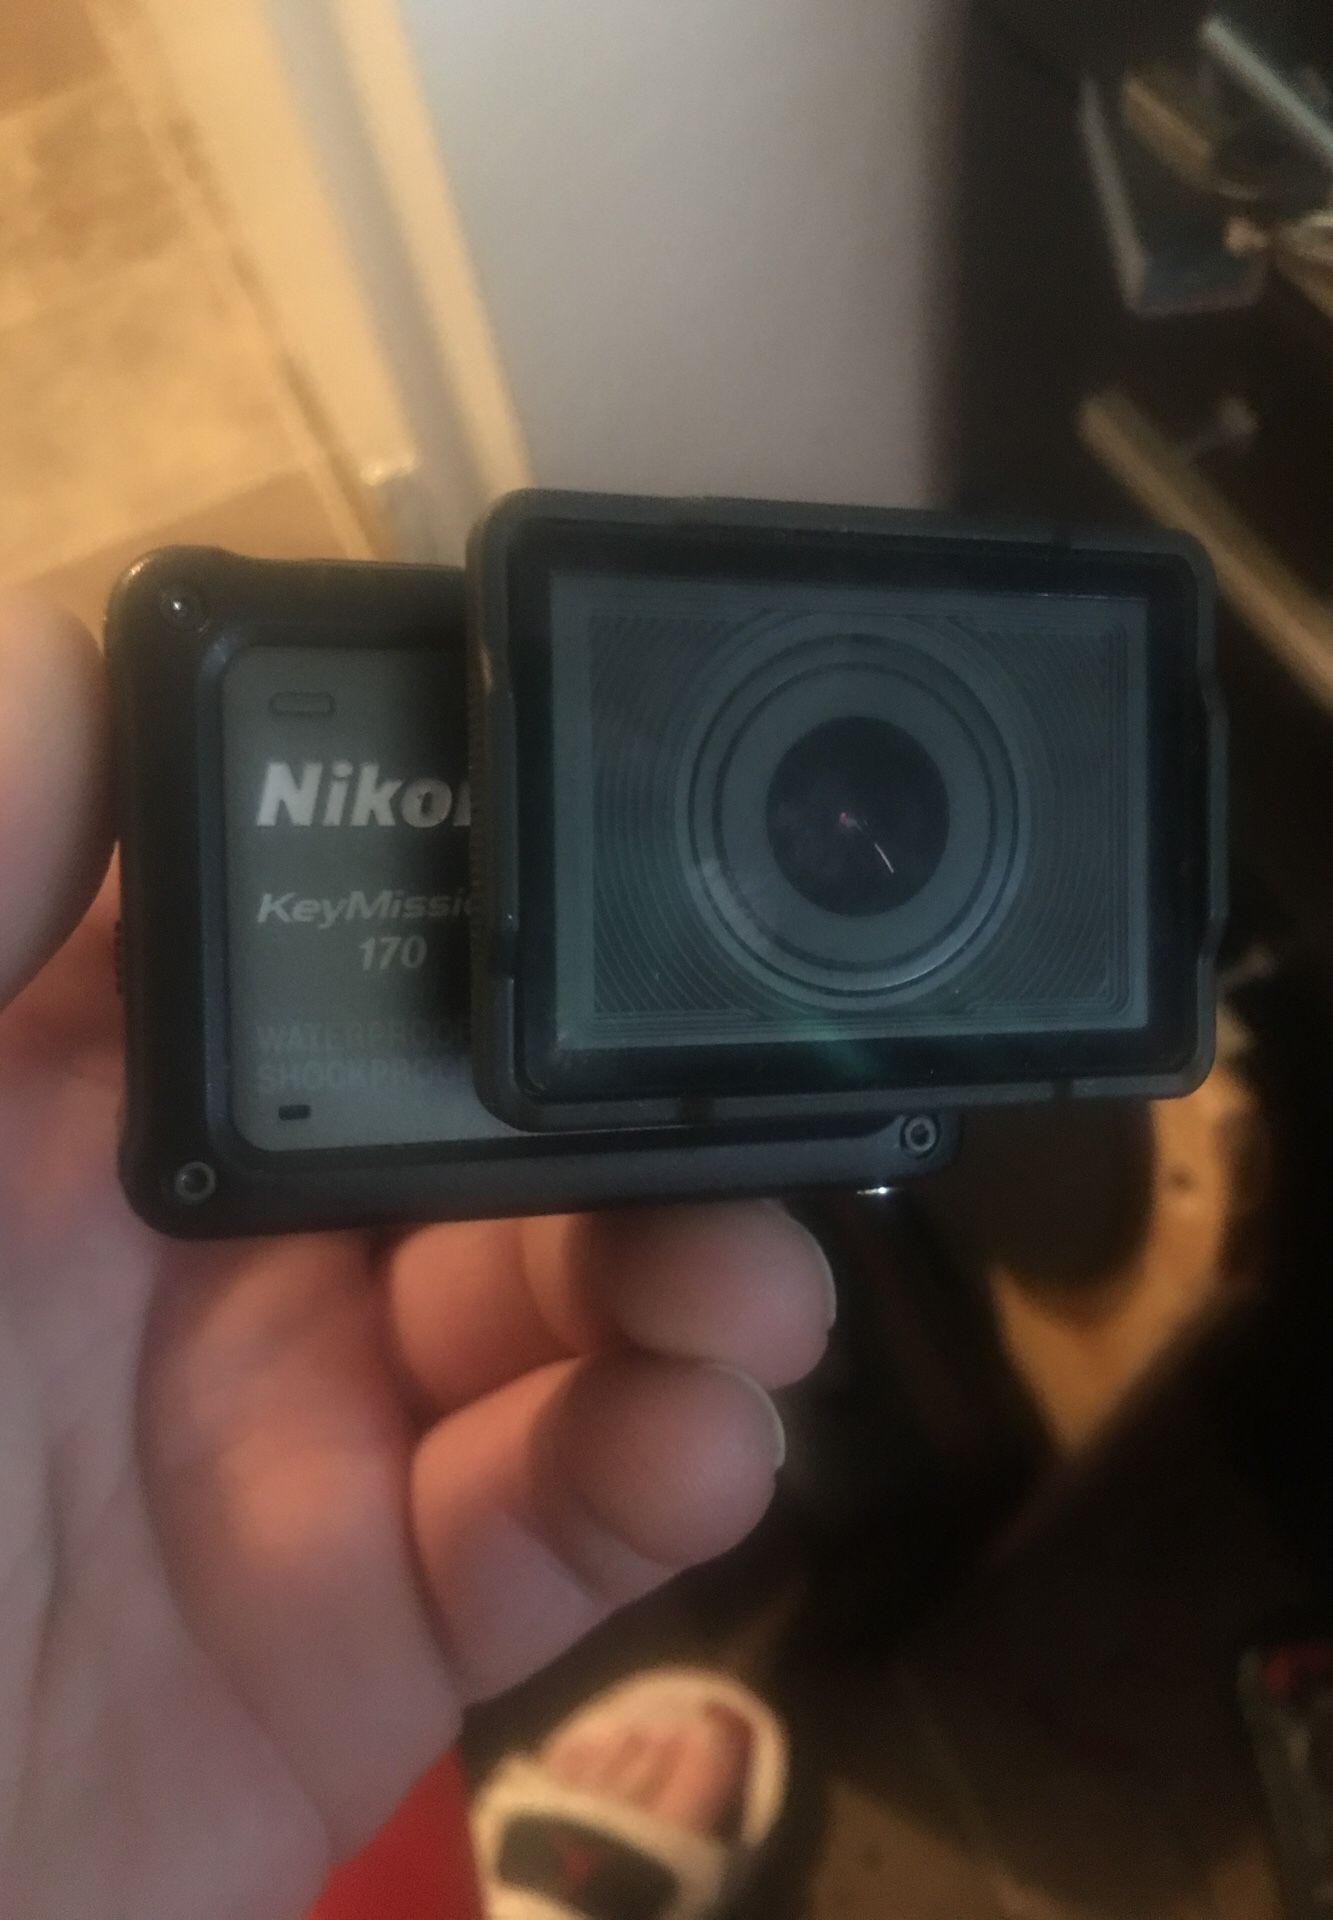 Nikon keymission 170